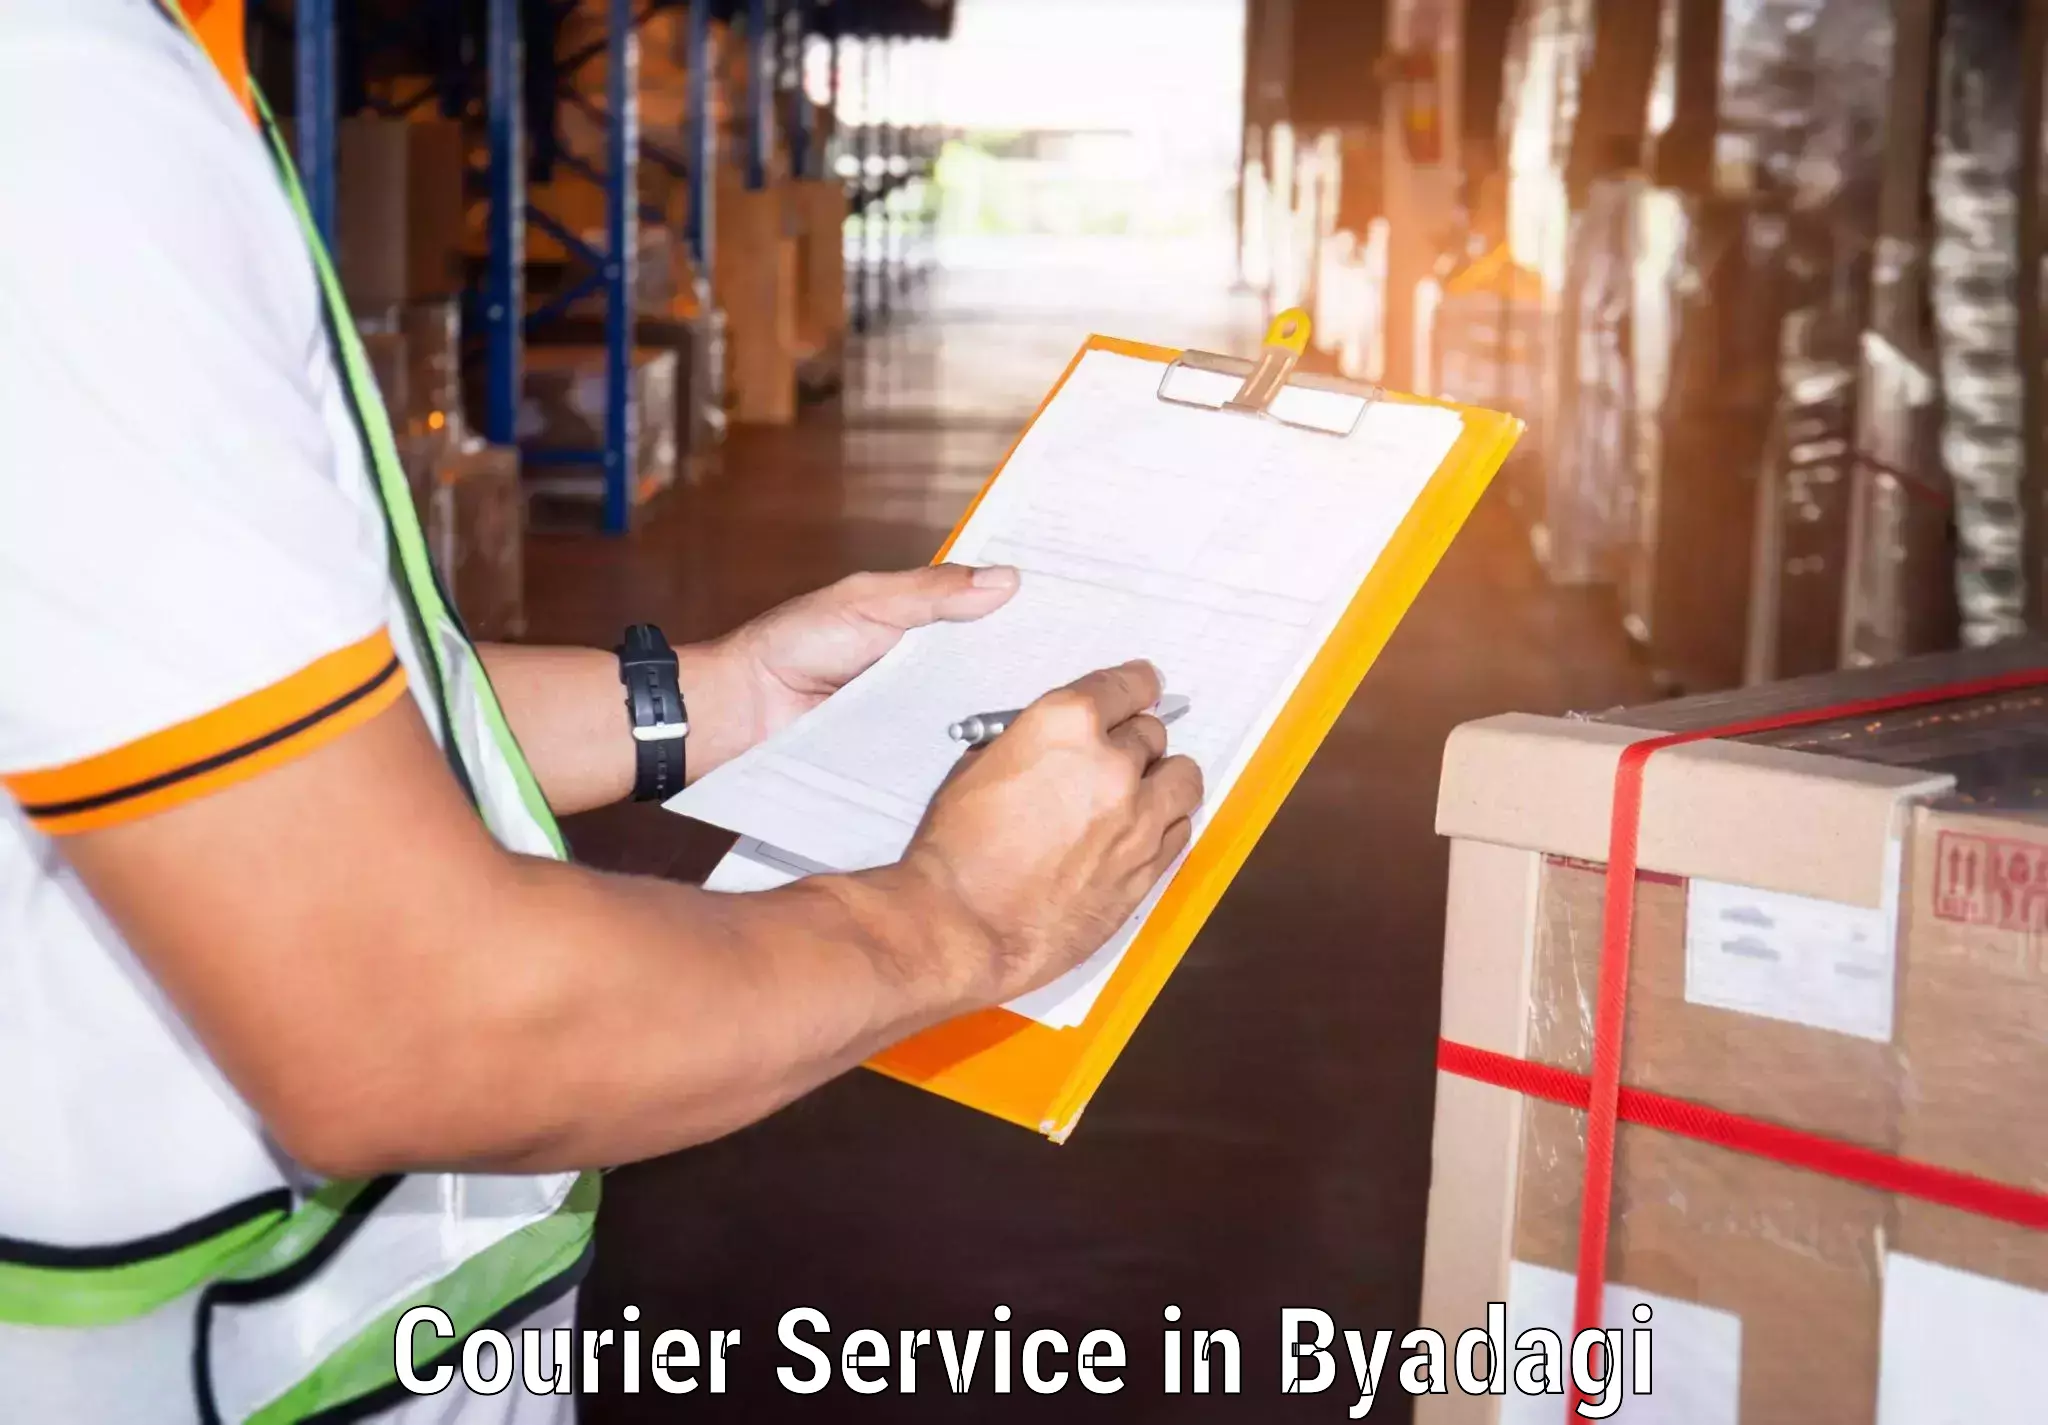 Business shipping needs in Byadagi